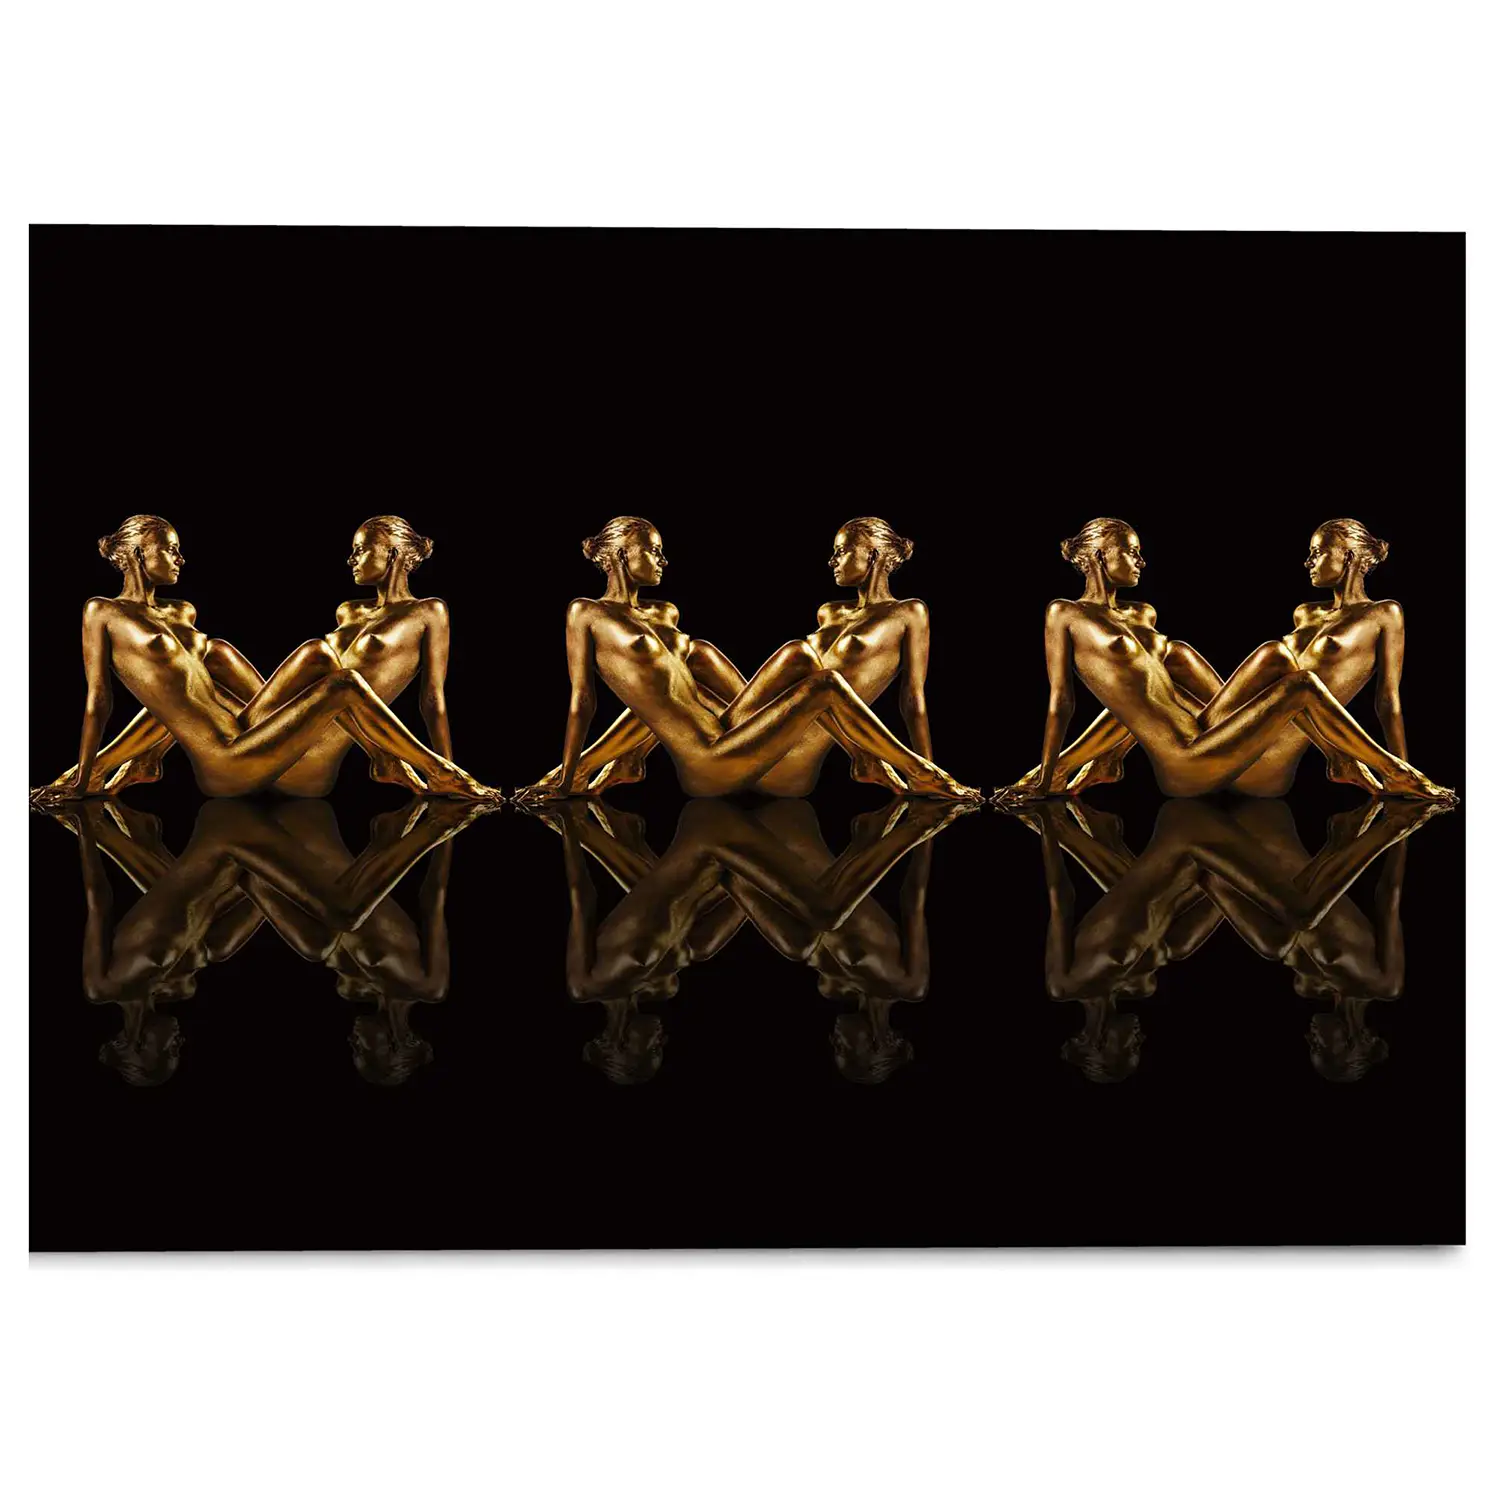 Symmetrie Frauen Gold in Glasbild